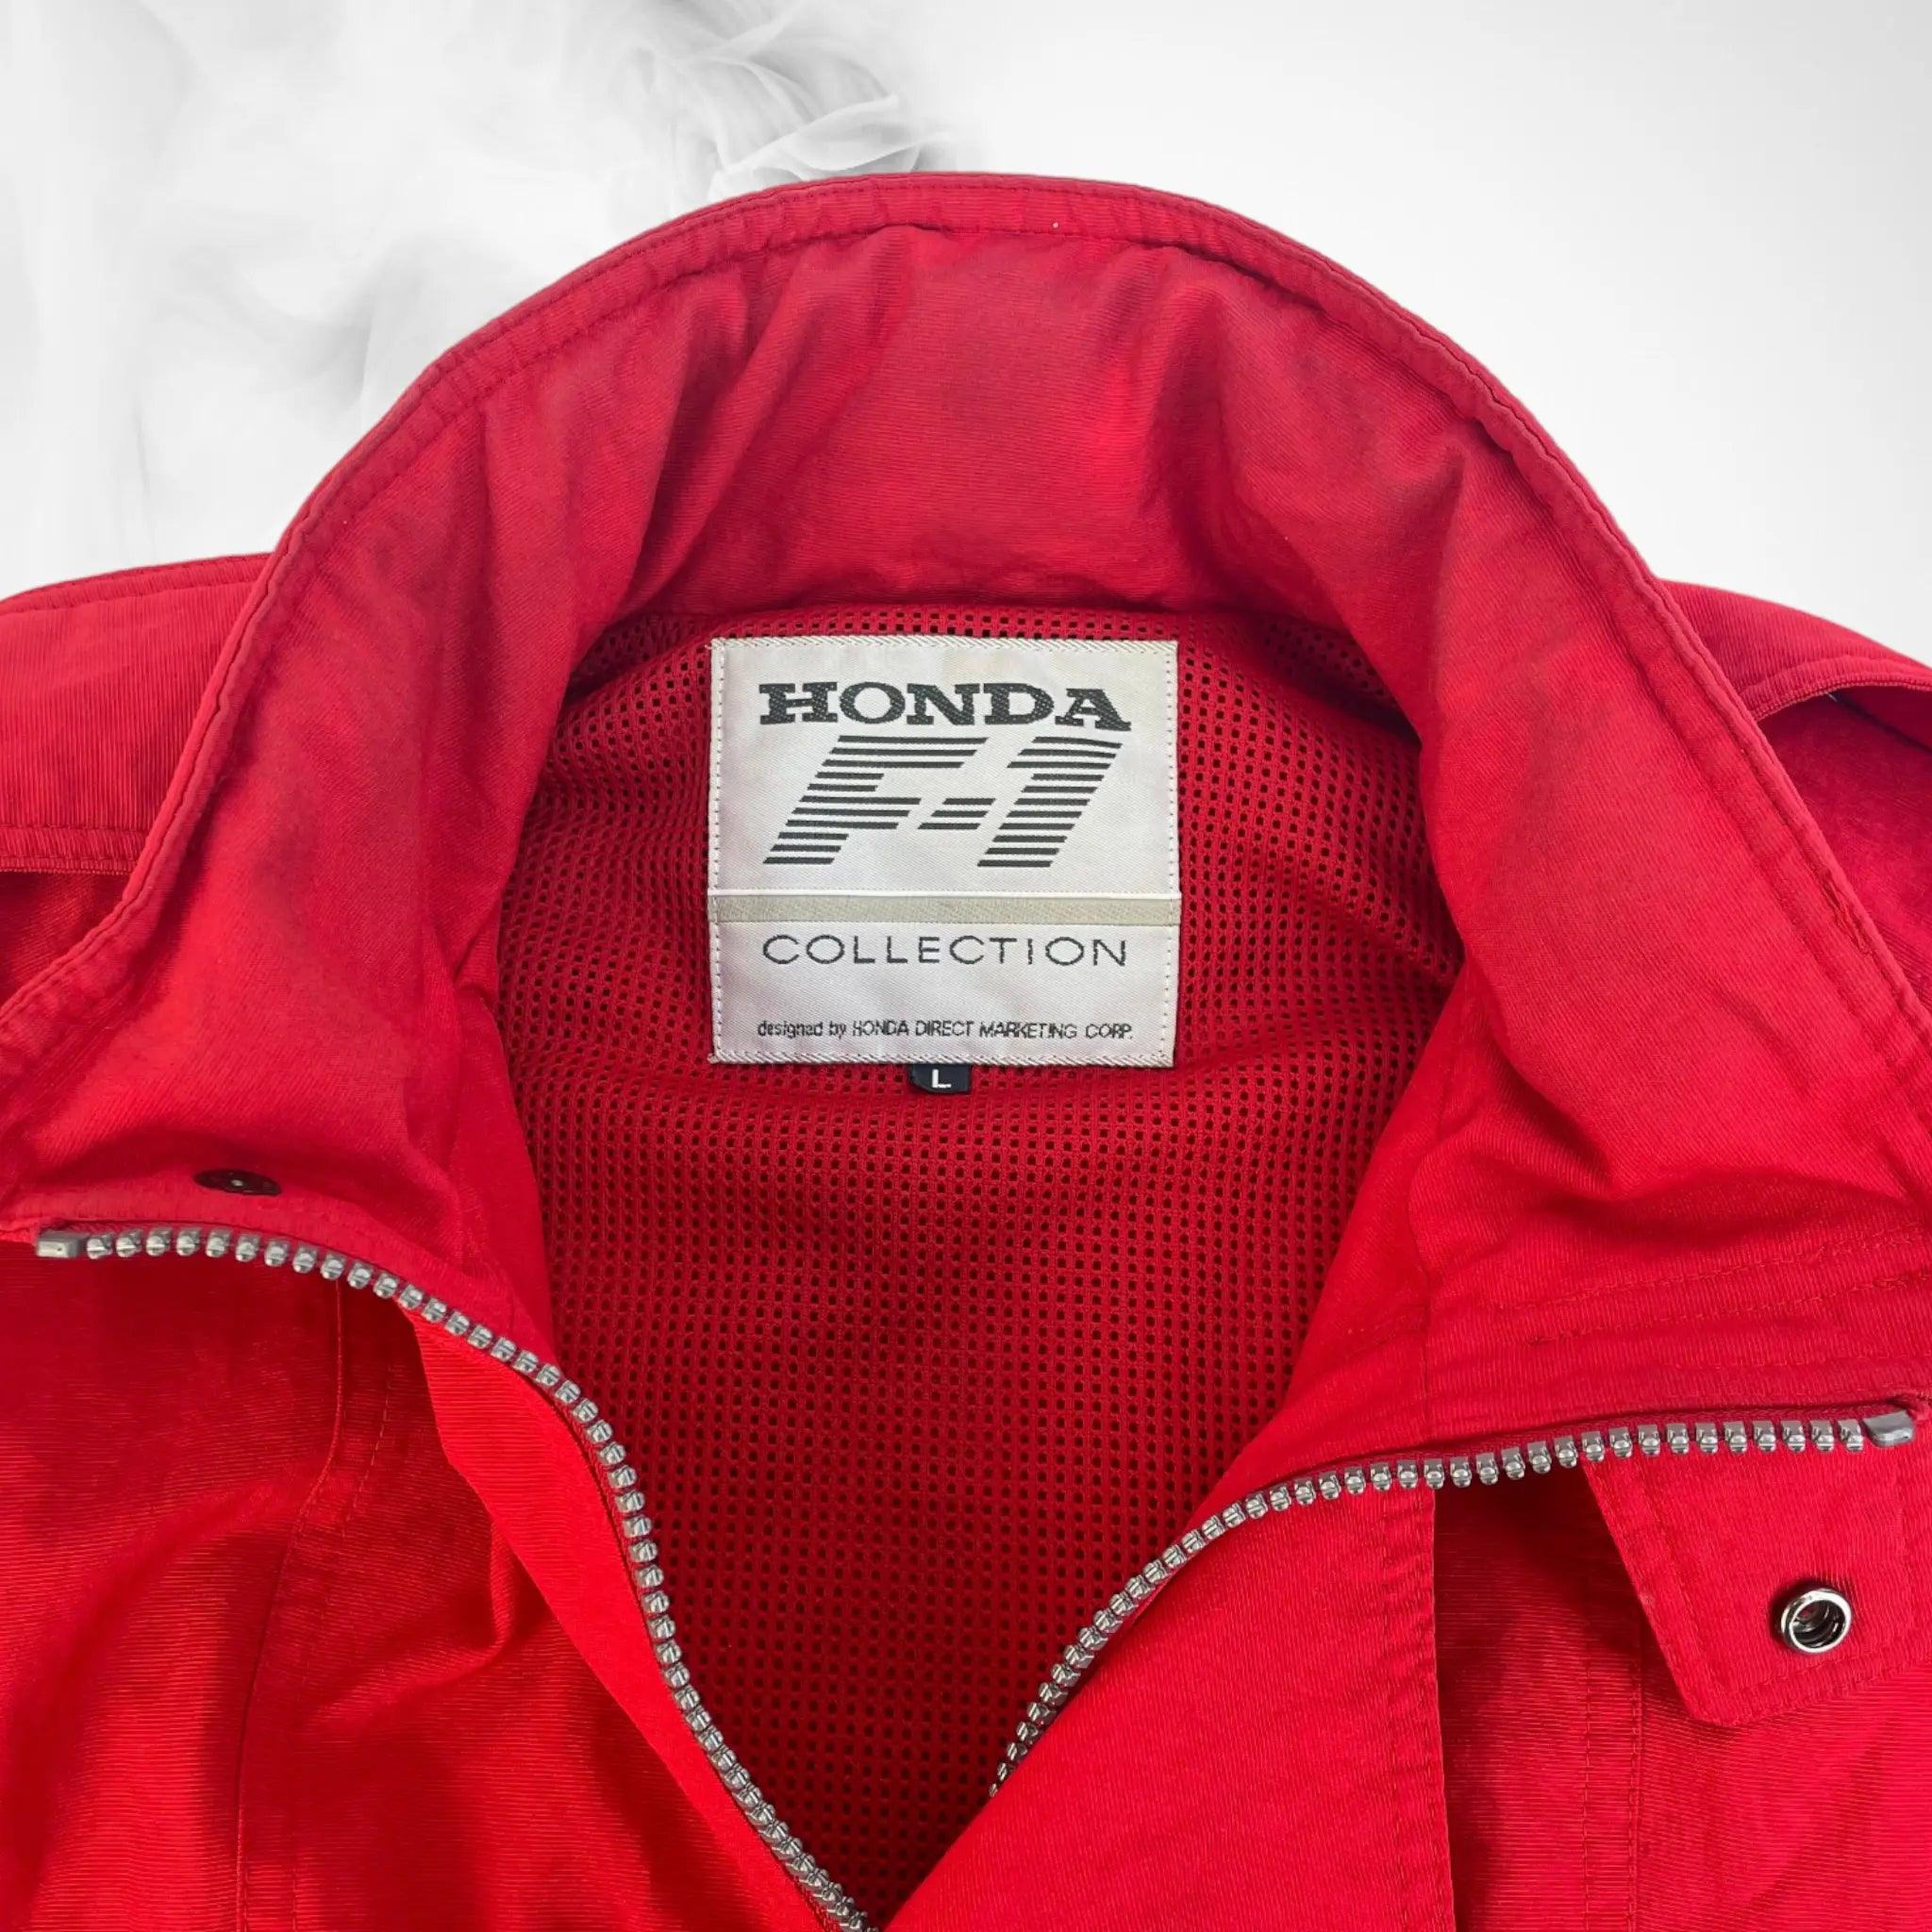 Honda F1 collection Jacket Mclaren Marlboro Ayrton Senna - Dash Racegear 